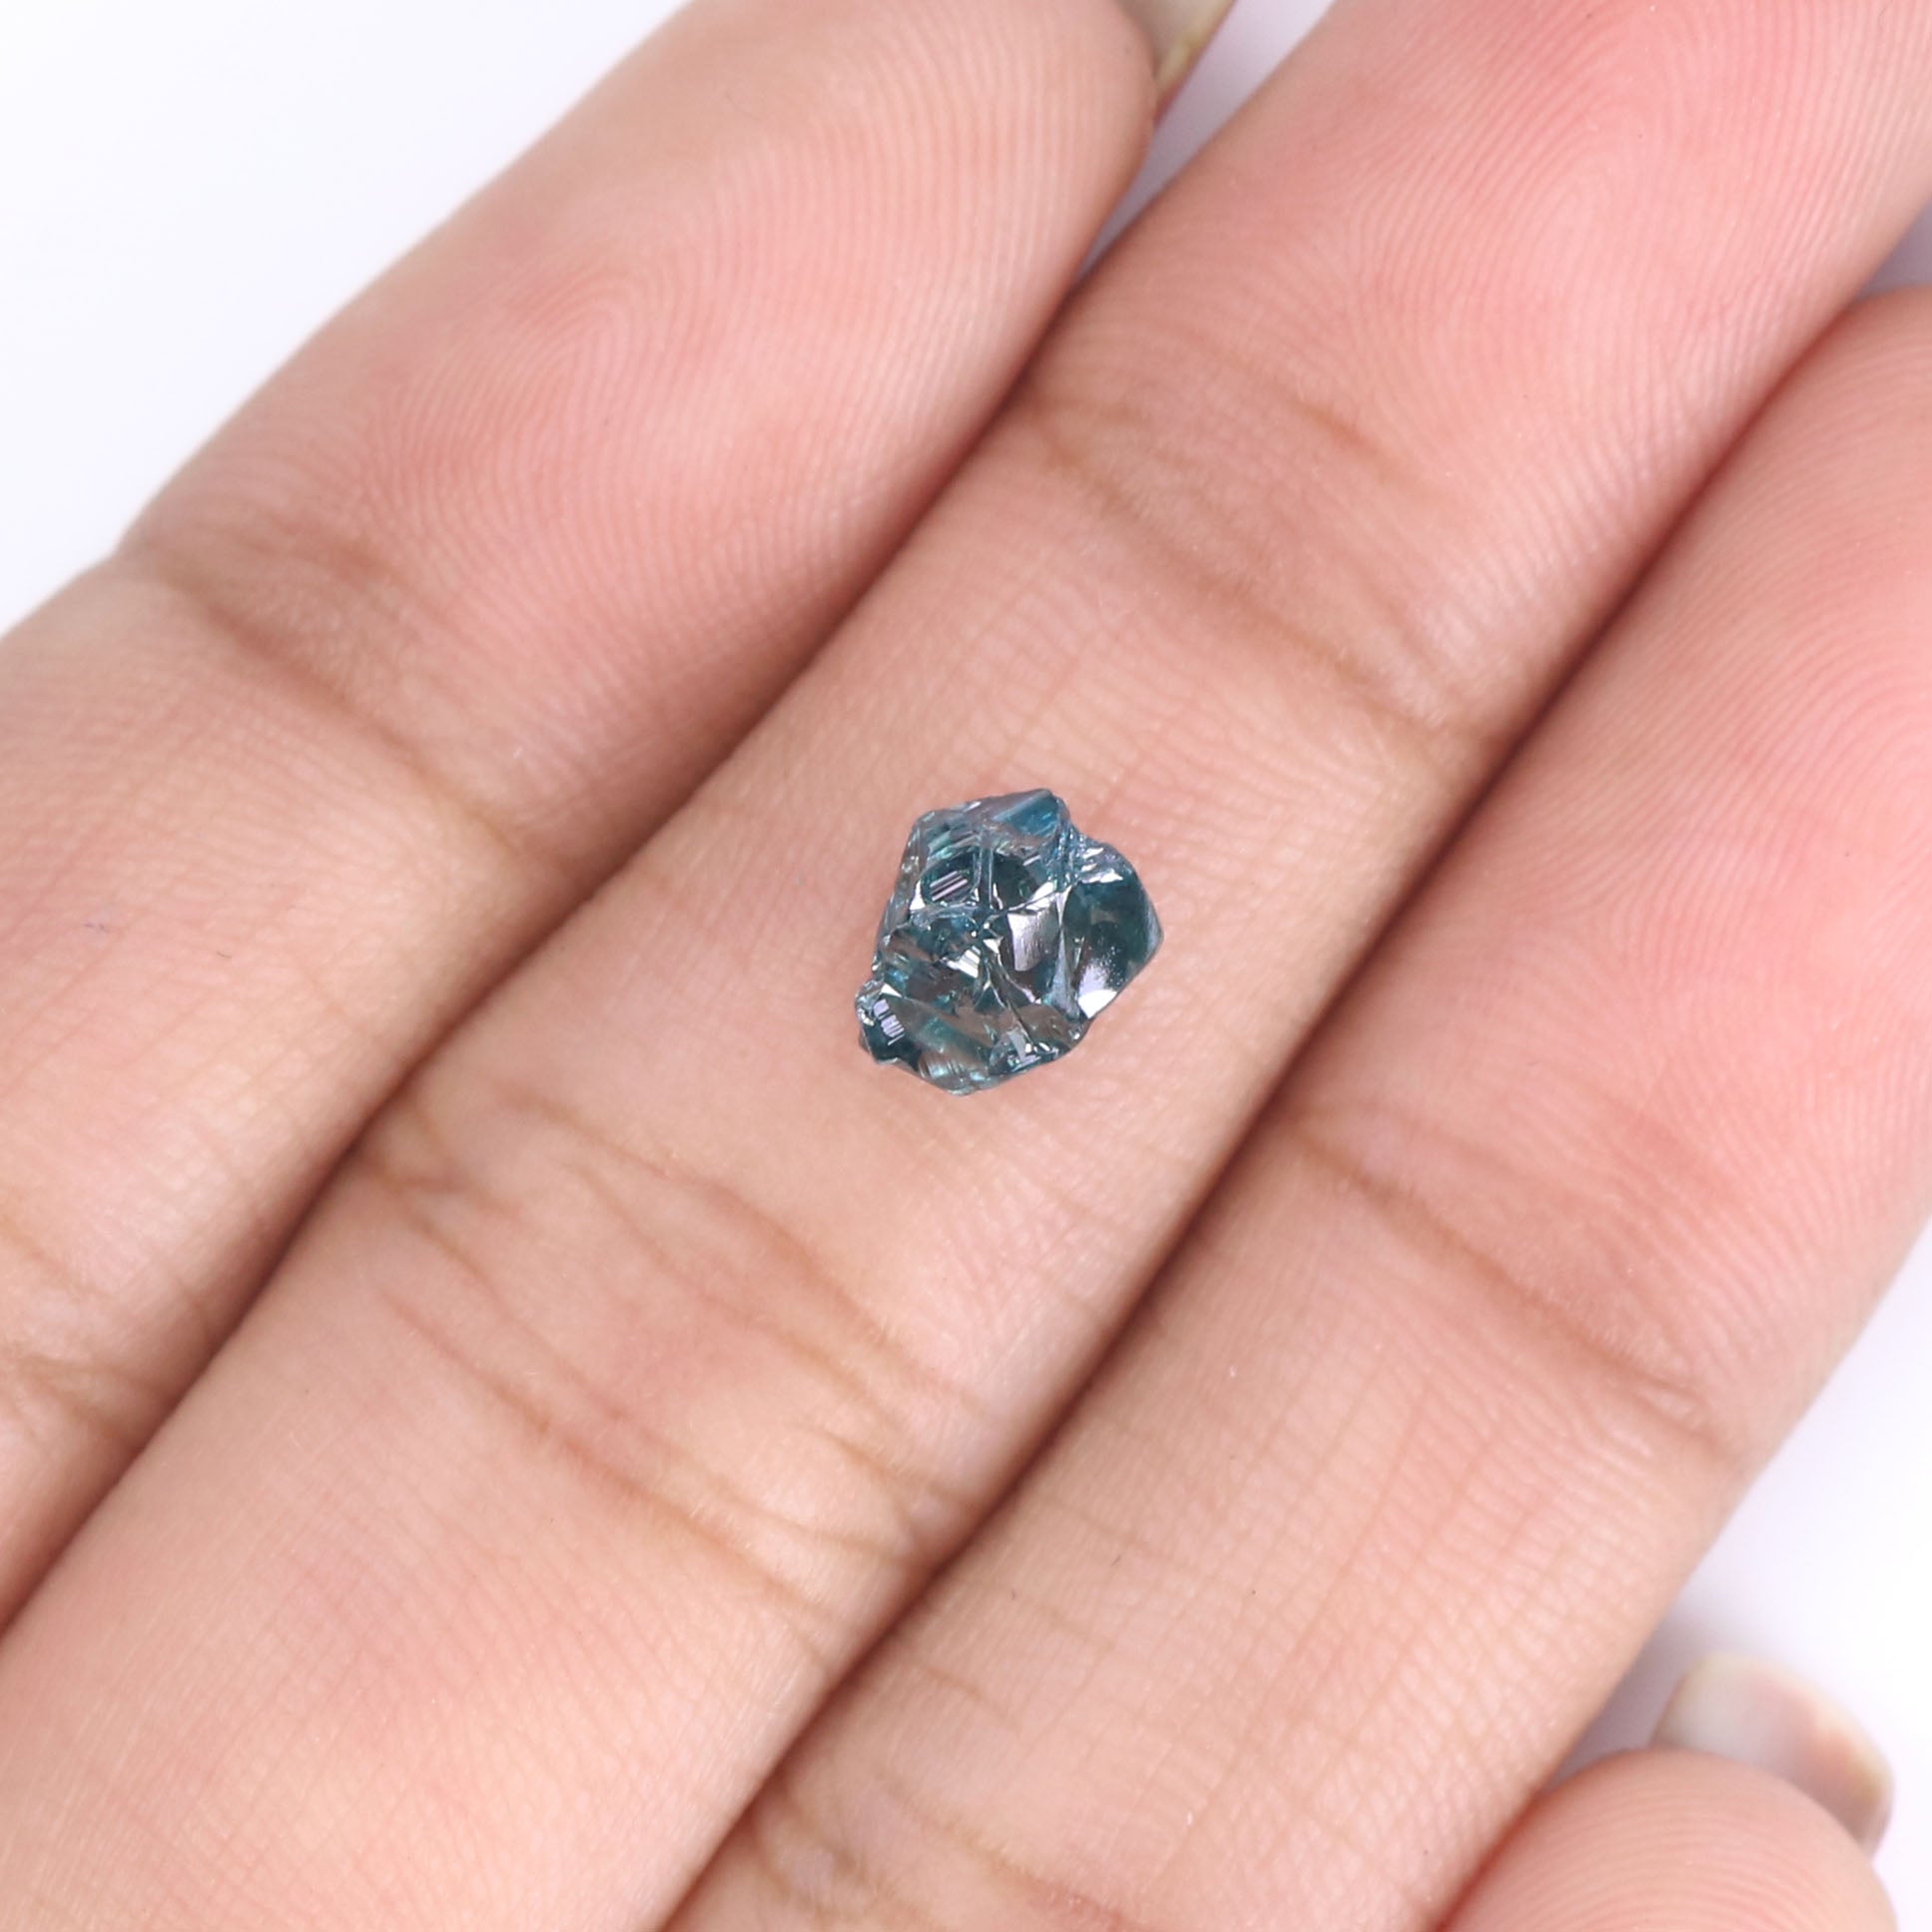 Natural Loose Rough Blue Color Diamond 1.19 CT 6.66 MM Rough Irregular Cut Diamond KDL2308